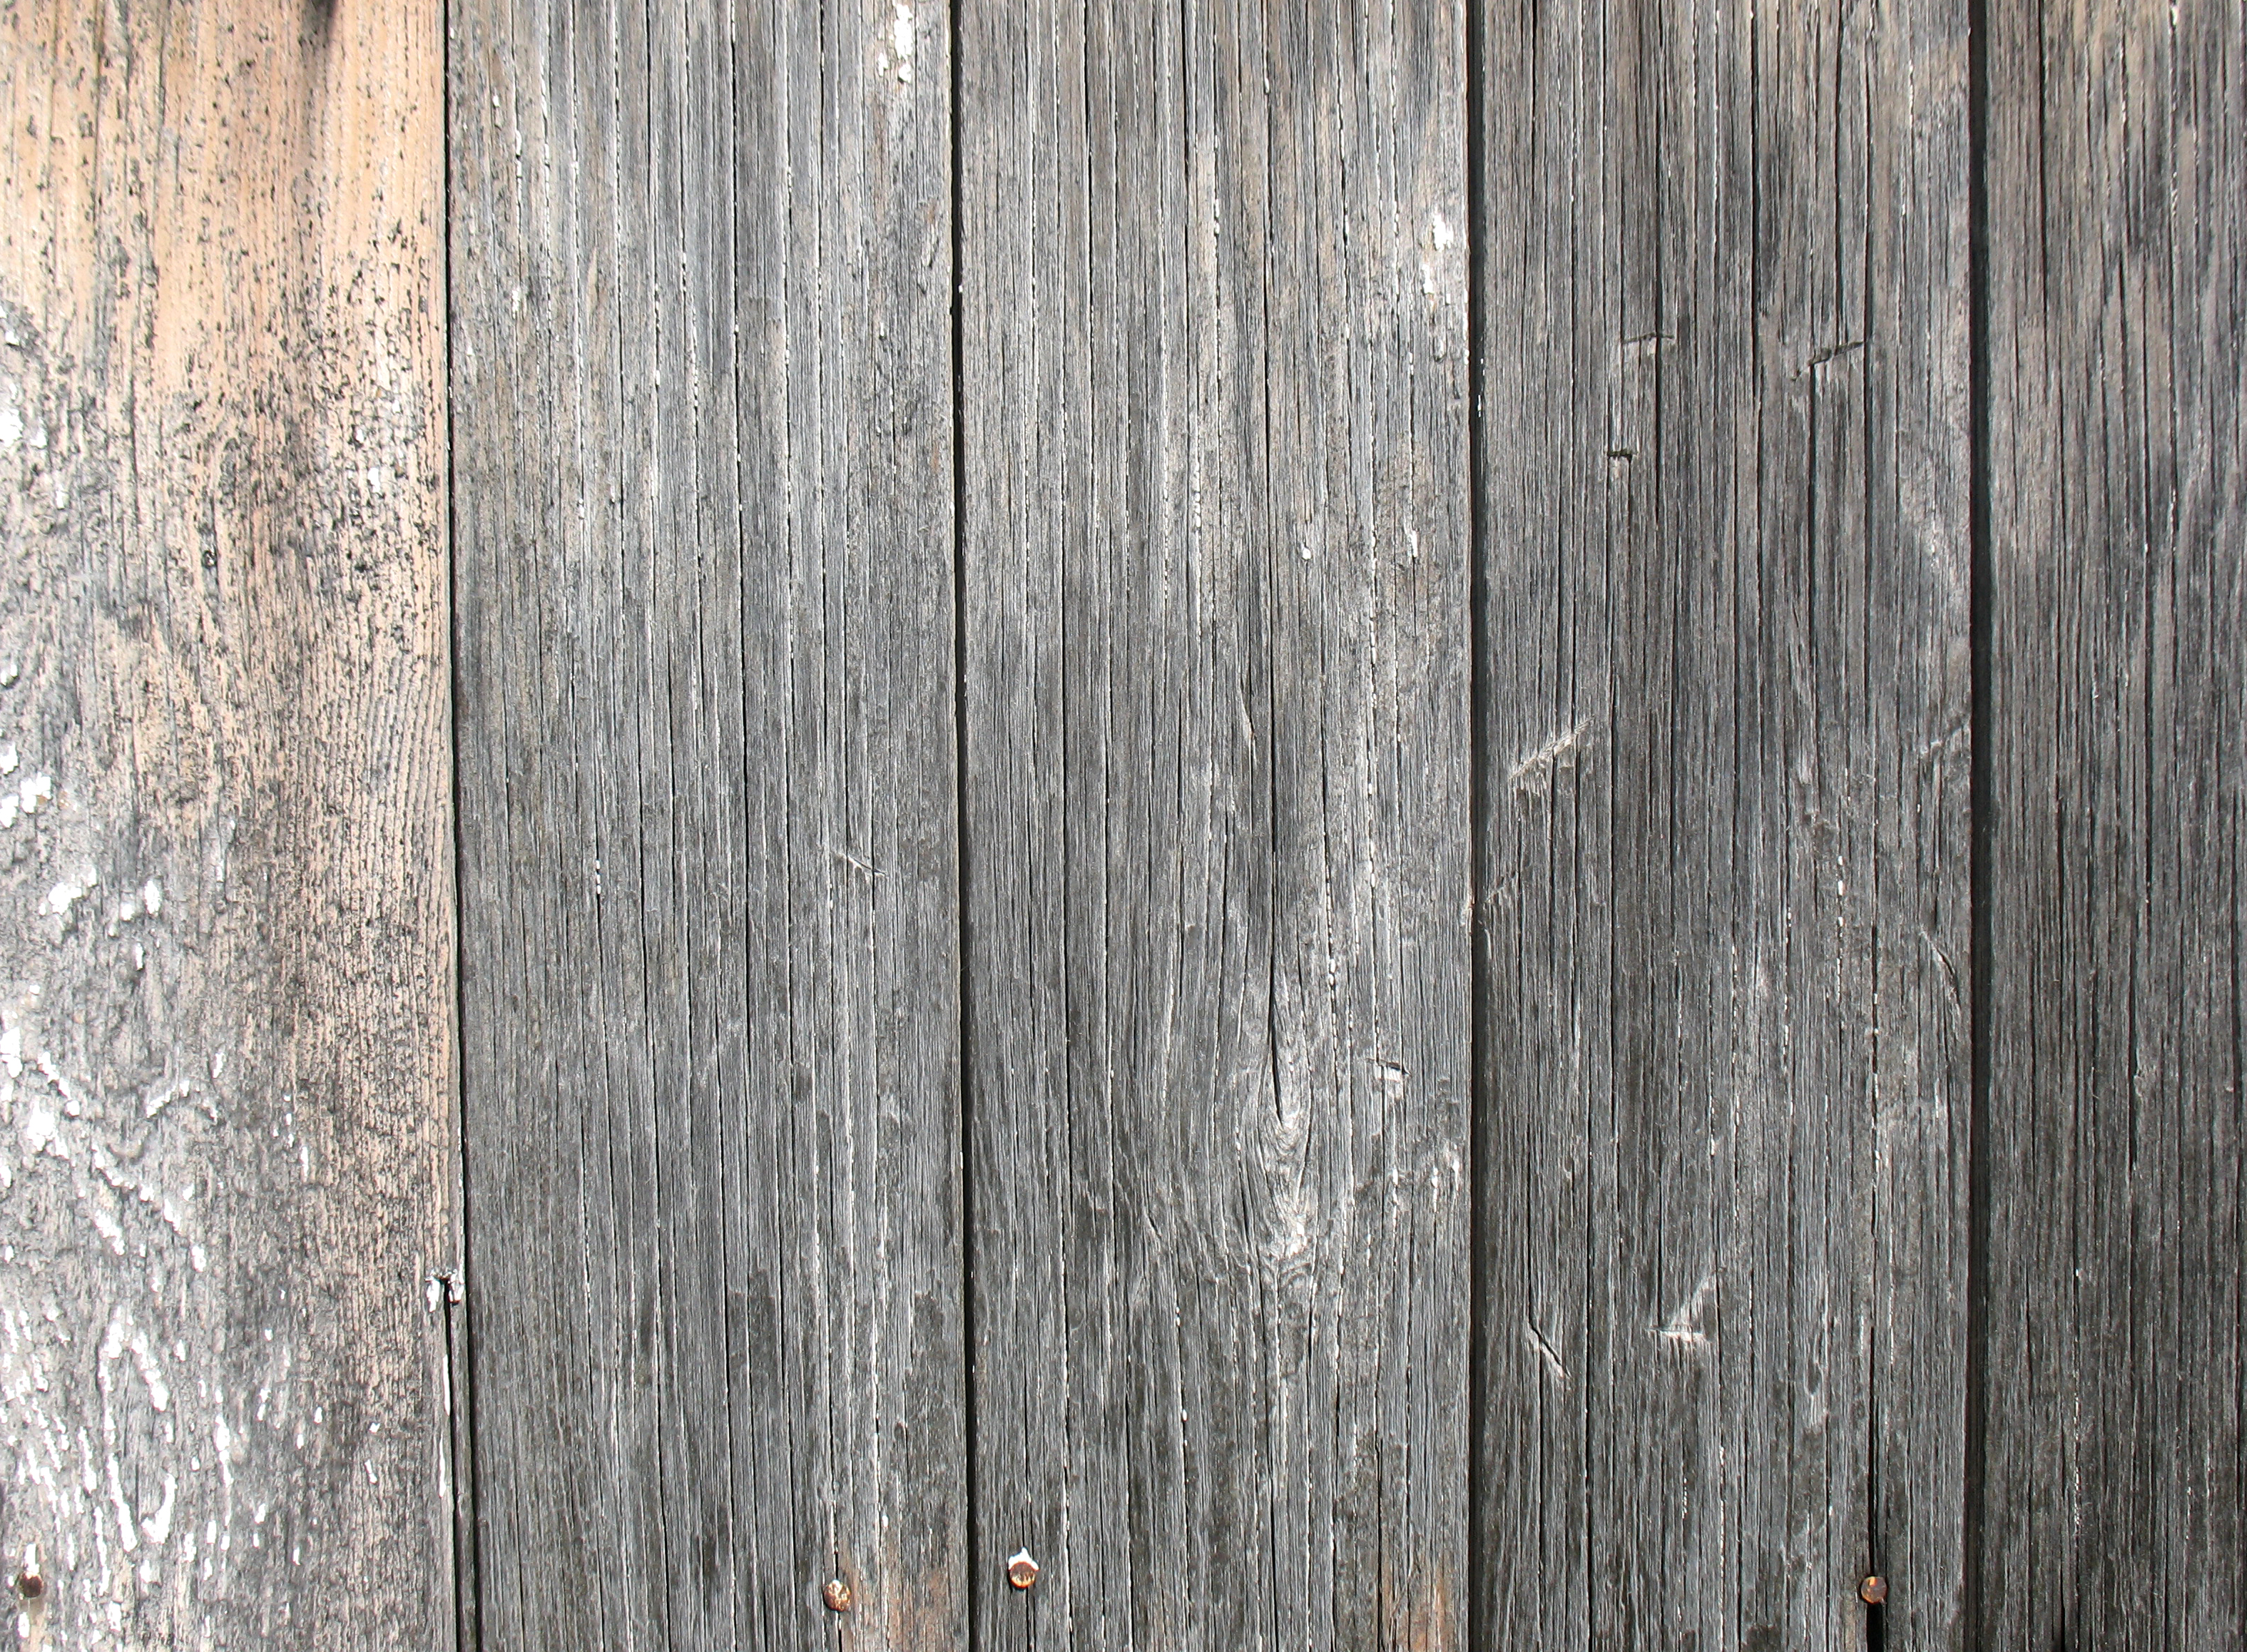 Wood Texture, Board, Cracked, Freetexturefrida, Surface, HQ Photo